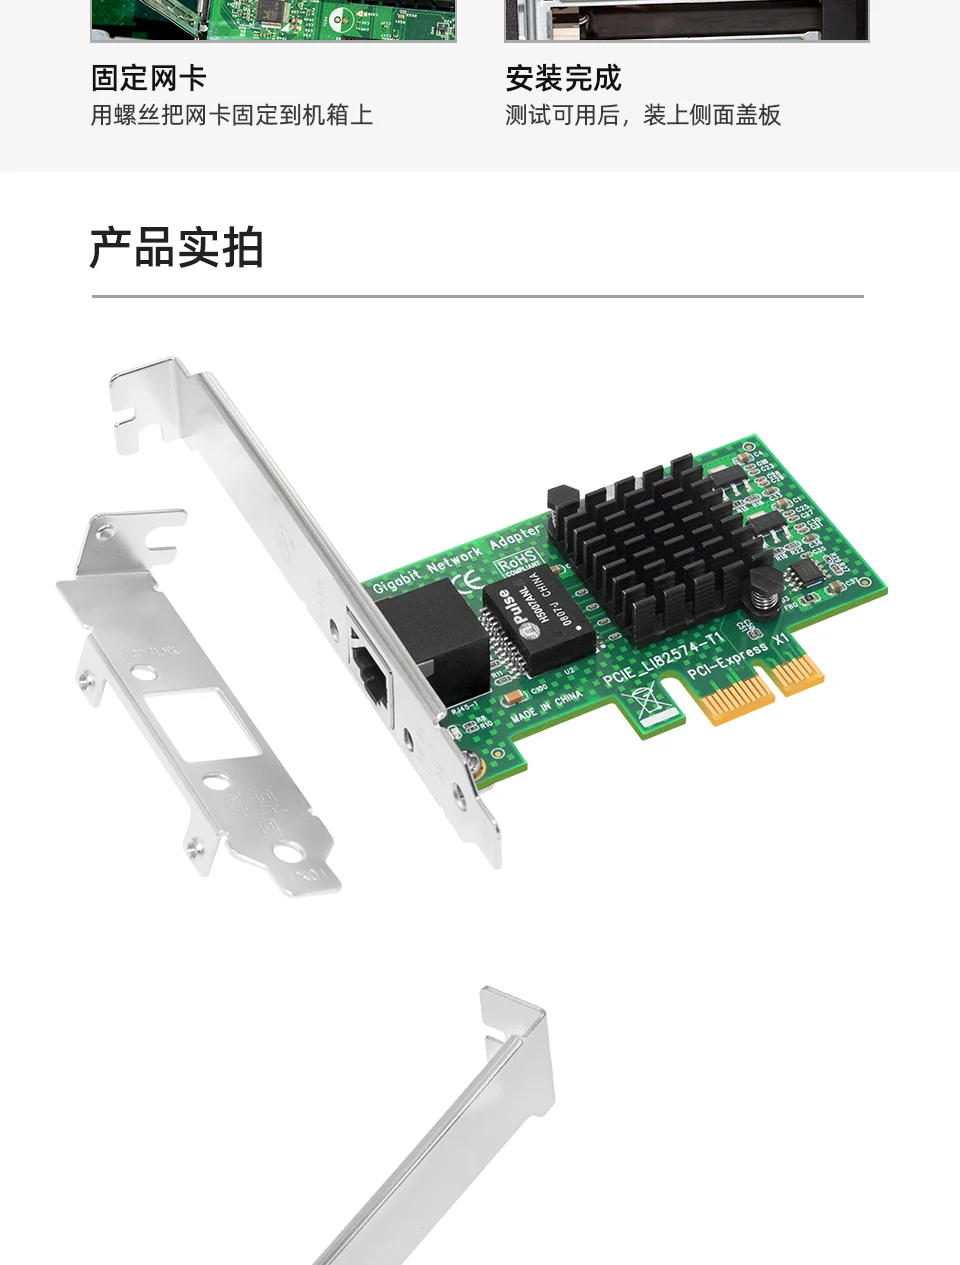 

EtherCAT Master Network Card TwinCAT Gigabit PCIE Interface LAN9252 AX58100 ET1100